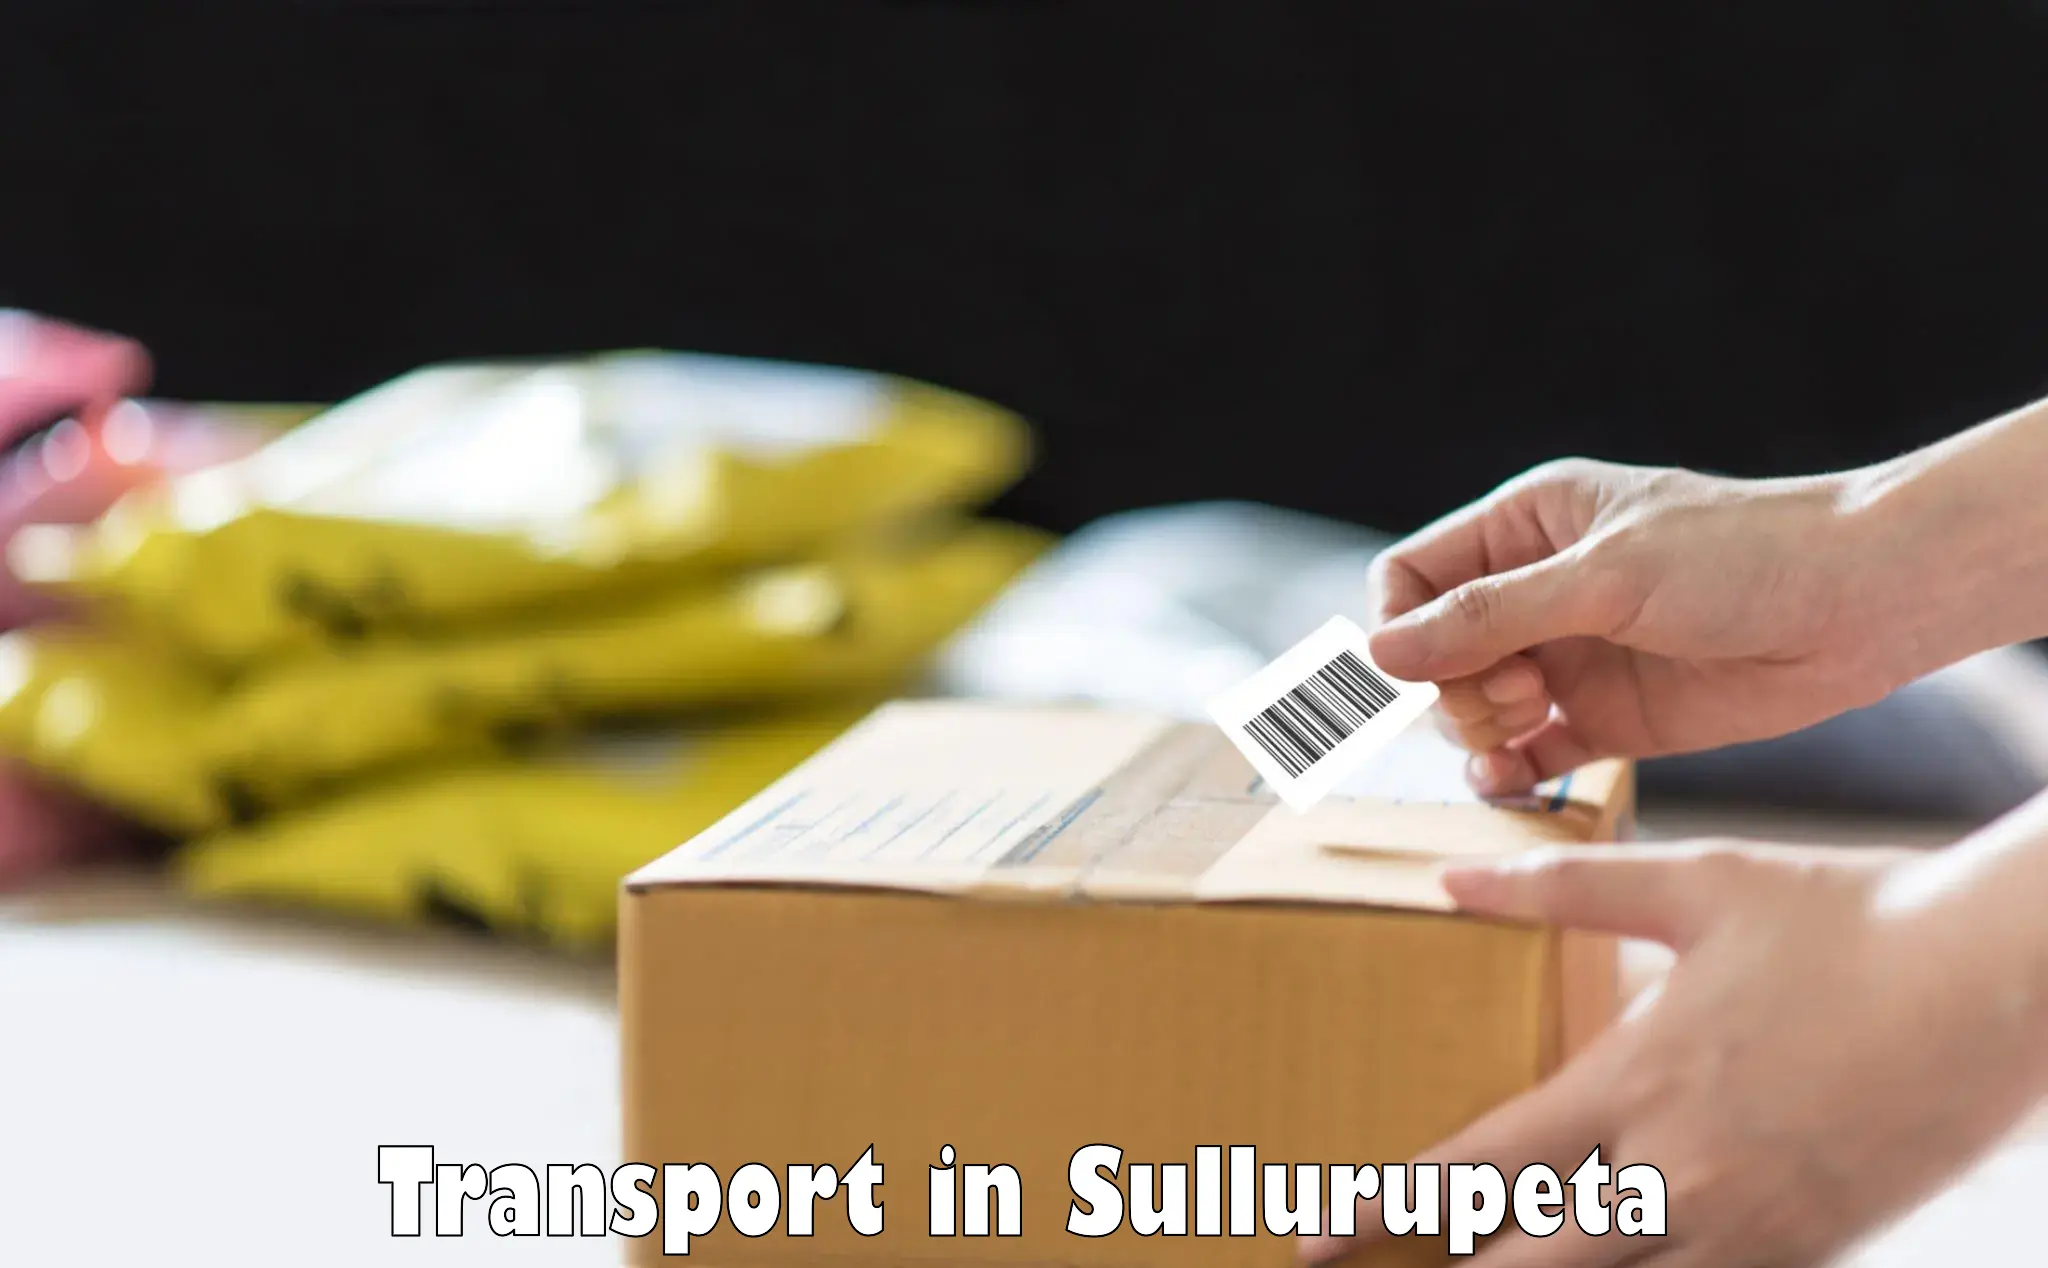 Transport shared services in Sullurupeta